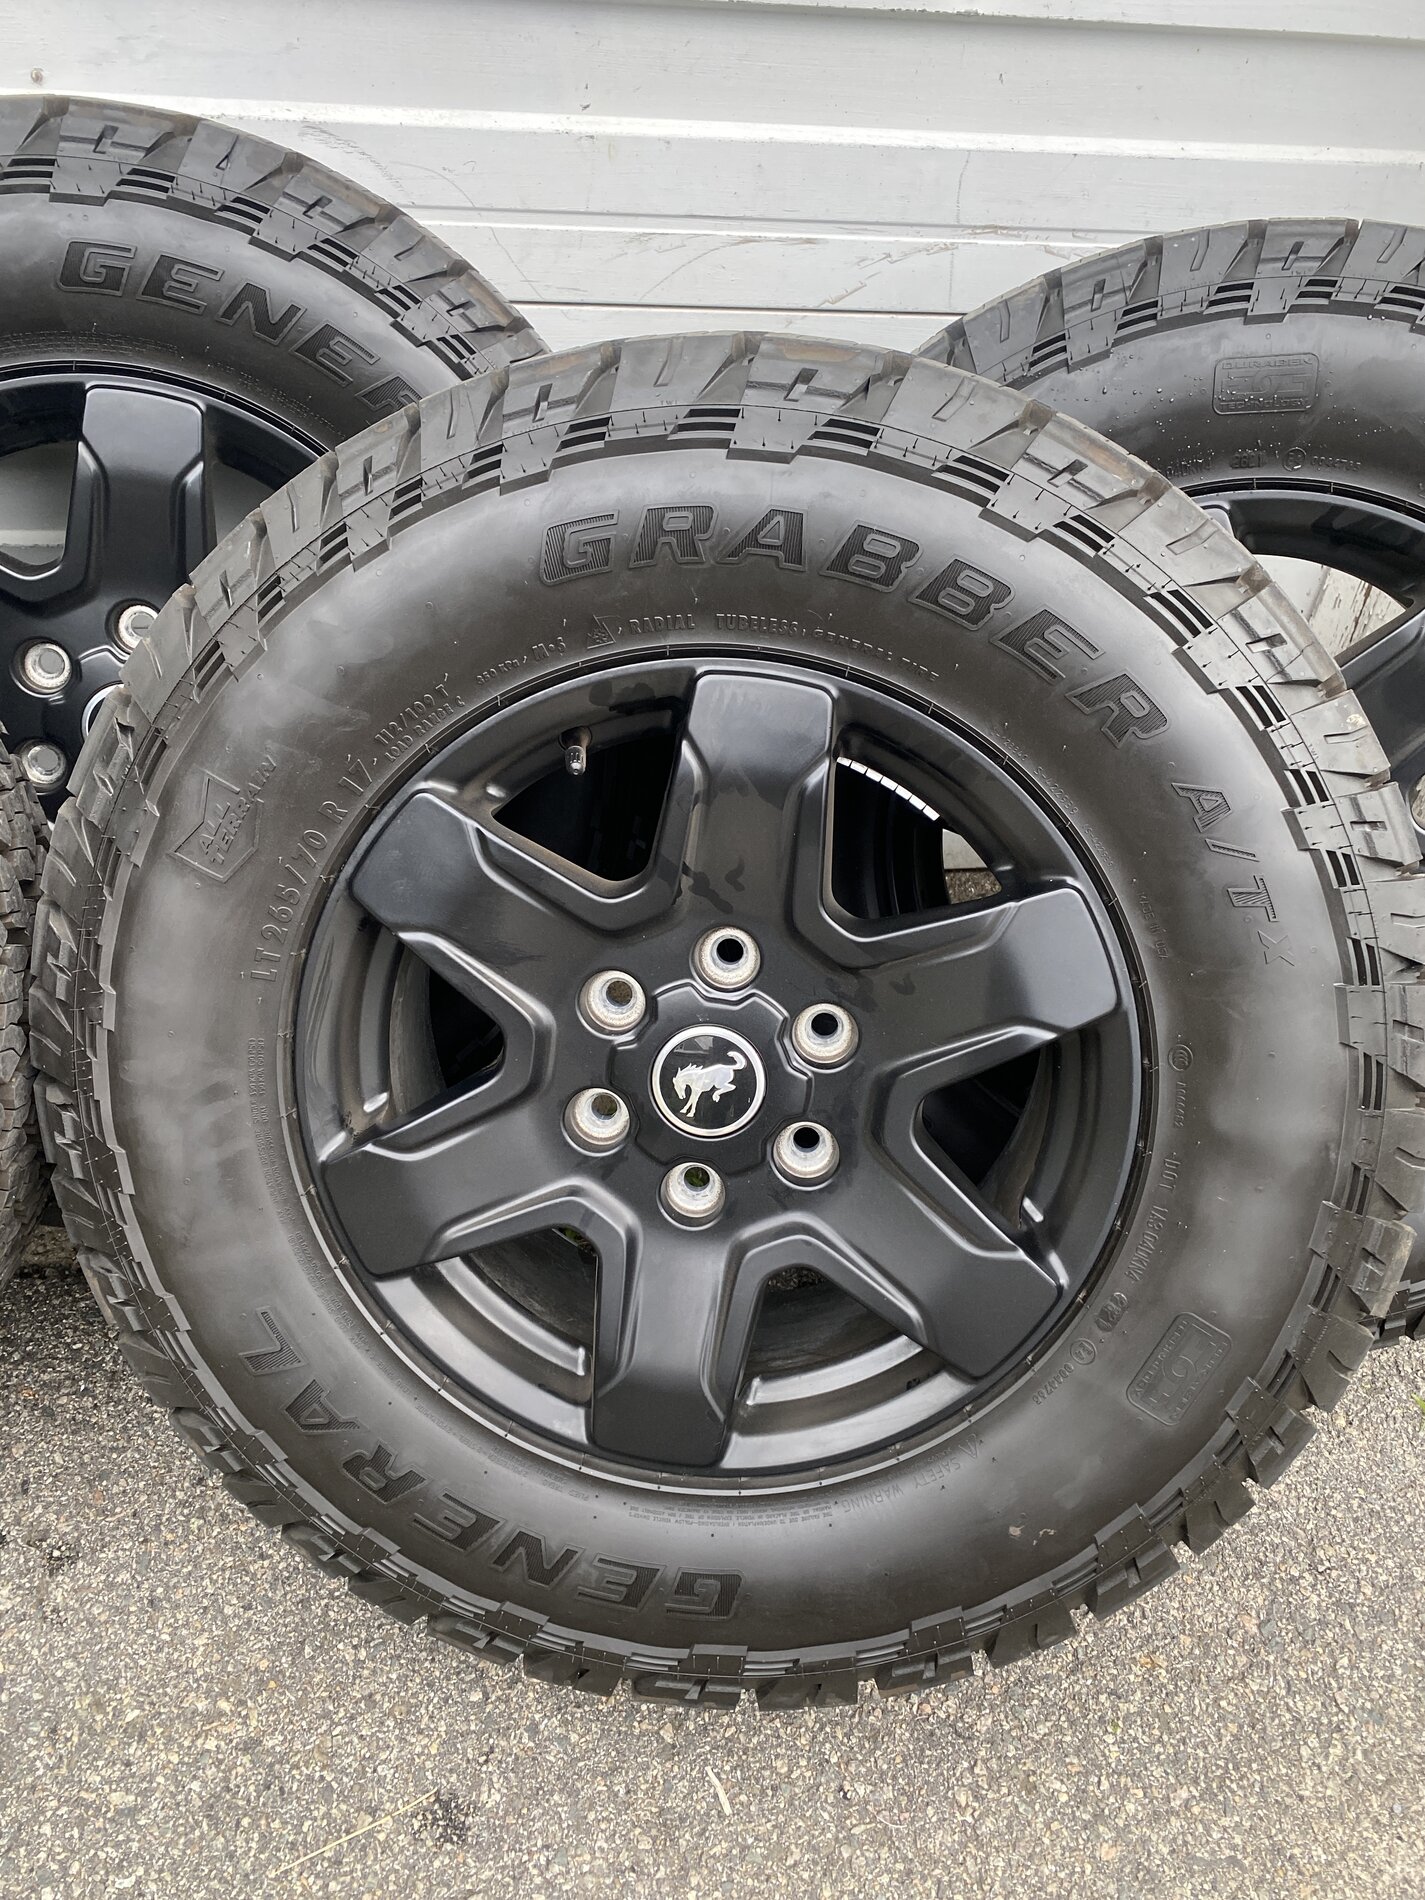 Ford Bronco For Sale: (5) Black Diamond Aluminum 17” and Tires $700 BAABFBD6-F03C-46AE-B4B7-6D2E28B072BD